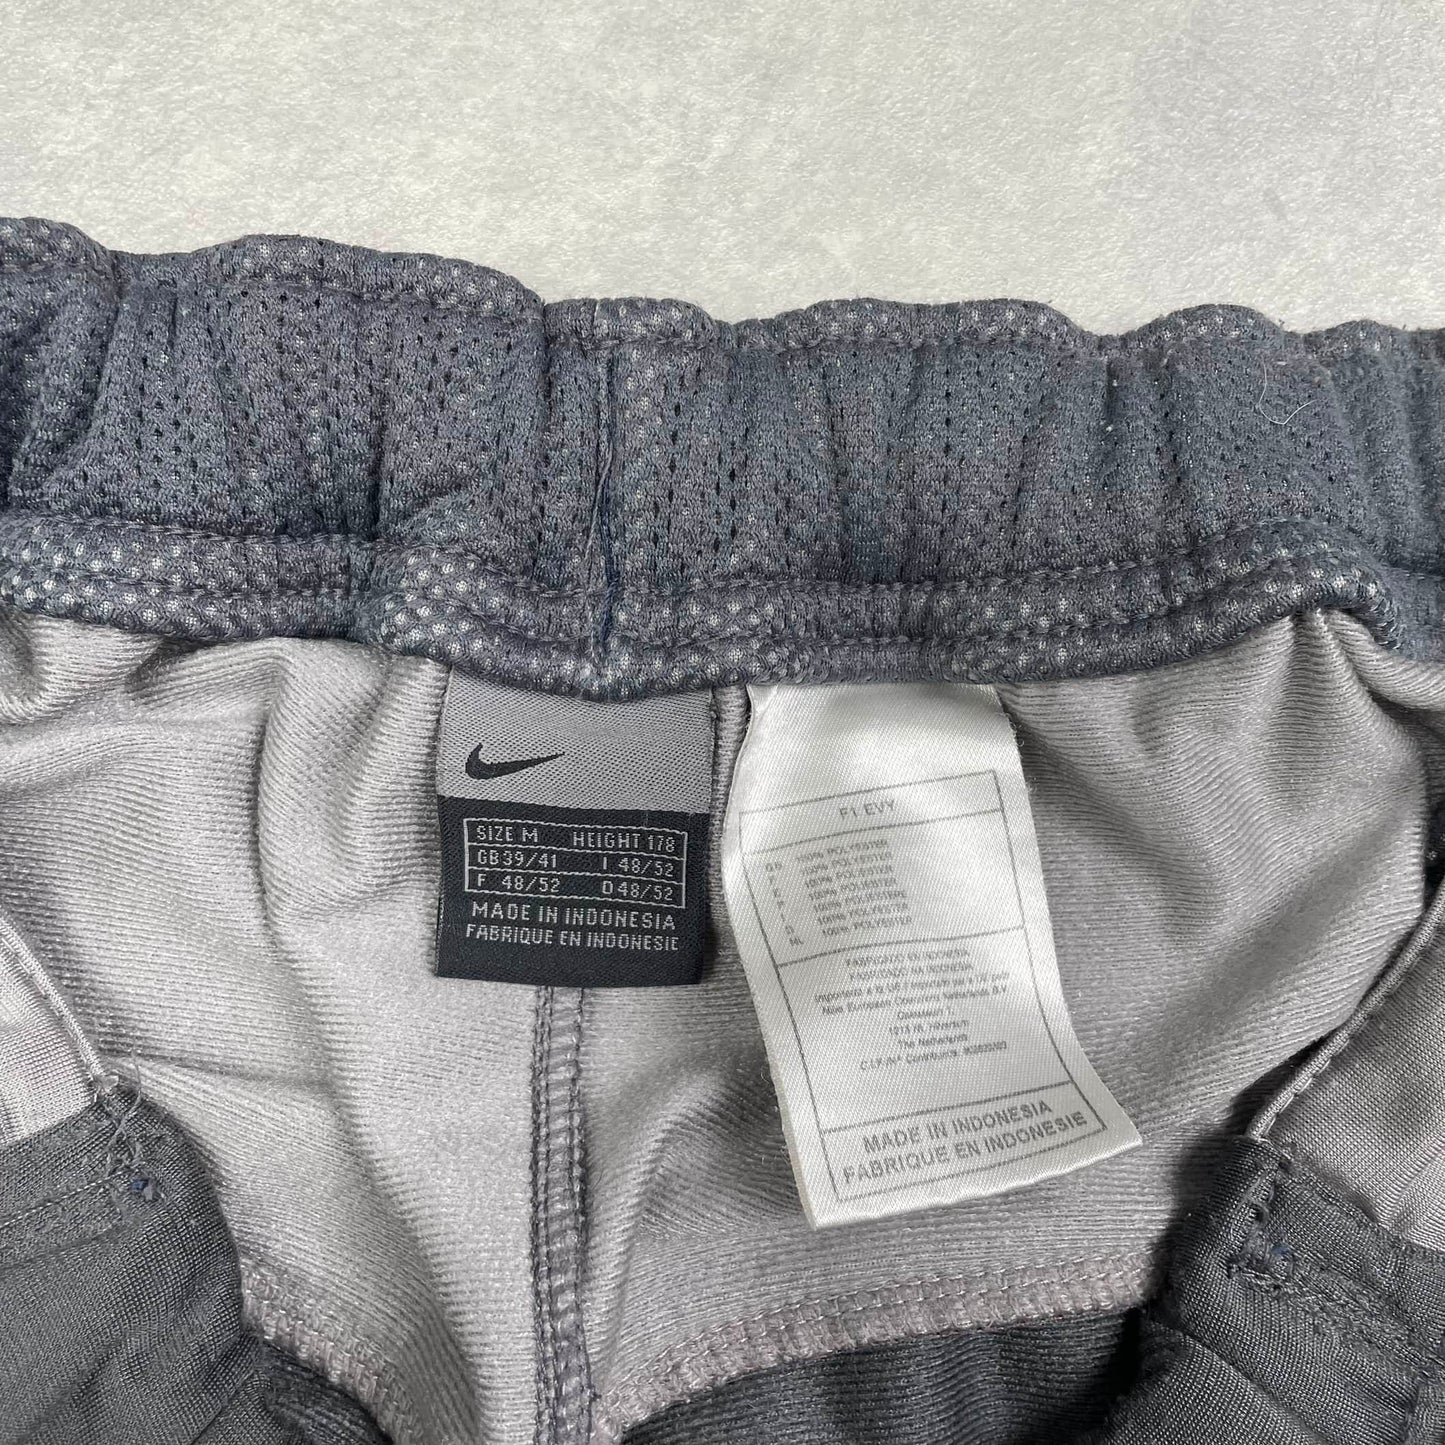 Vintage Nike Trackpants 00’s Grey